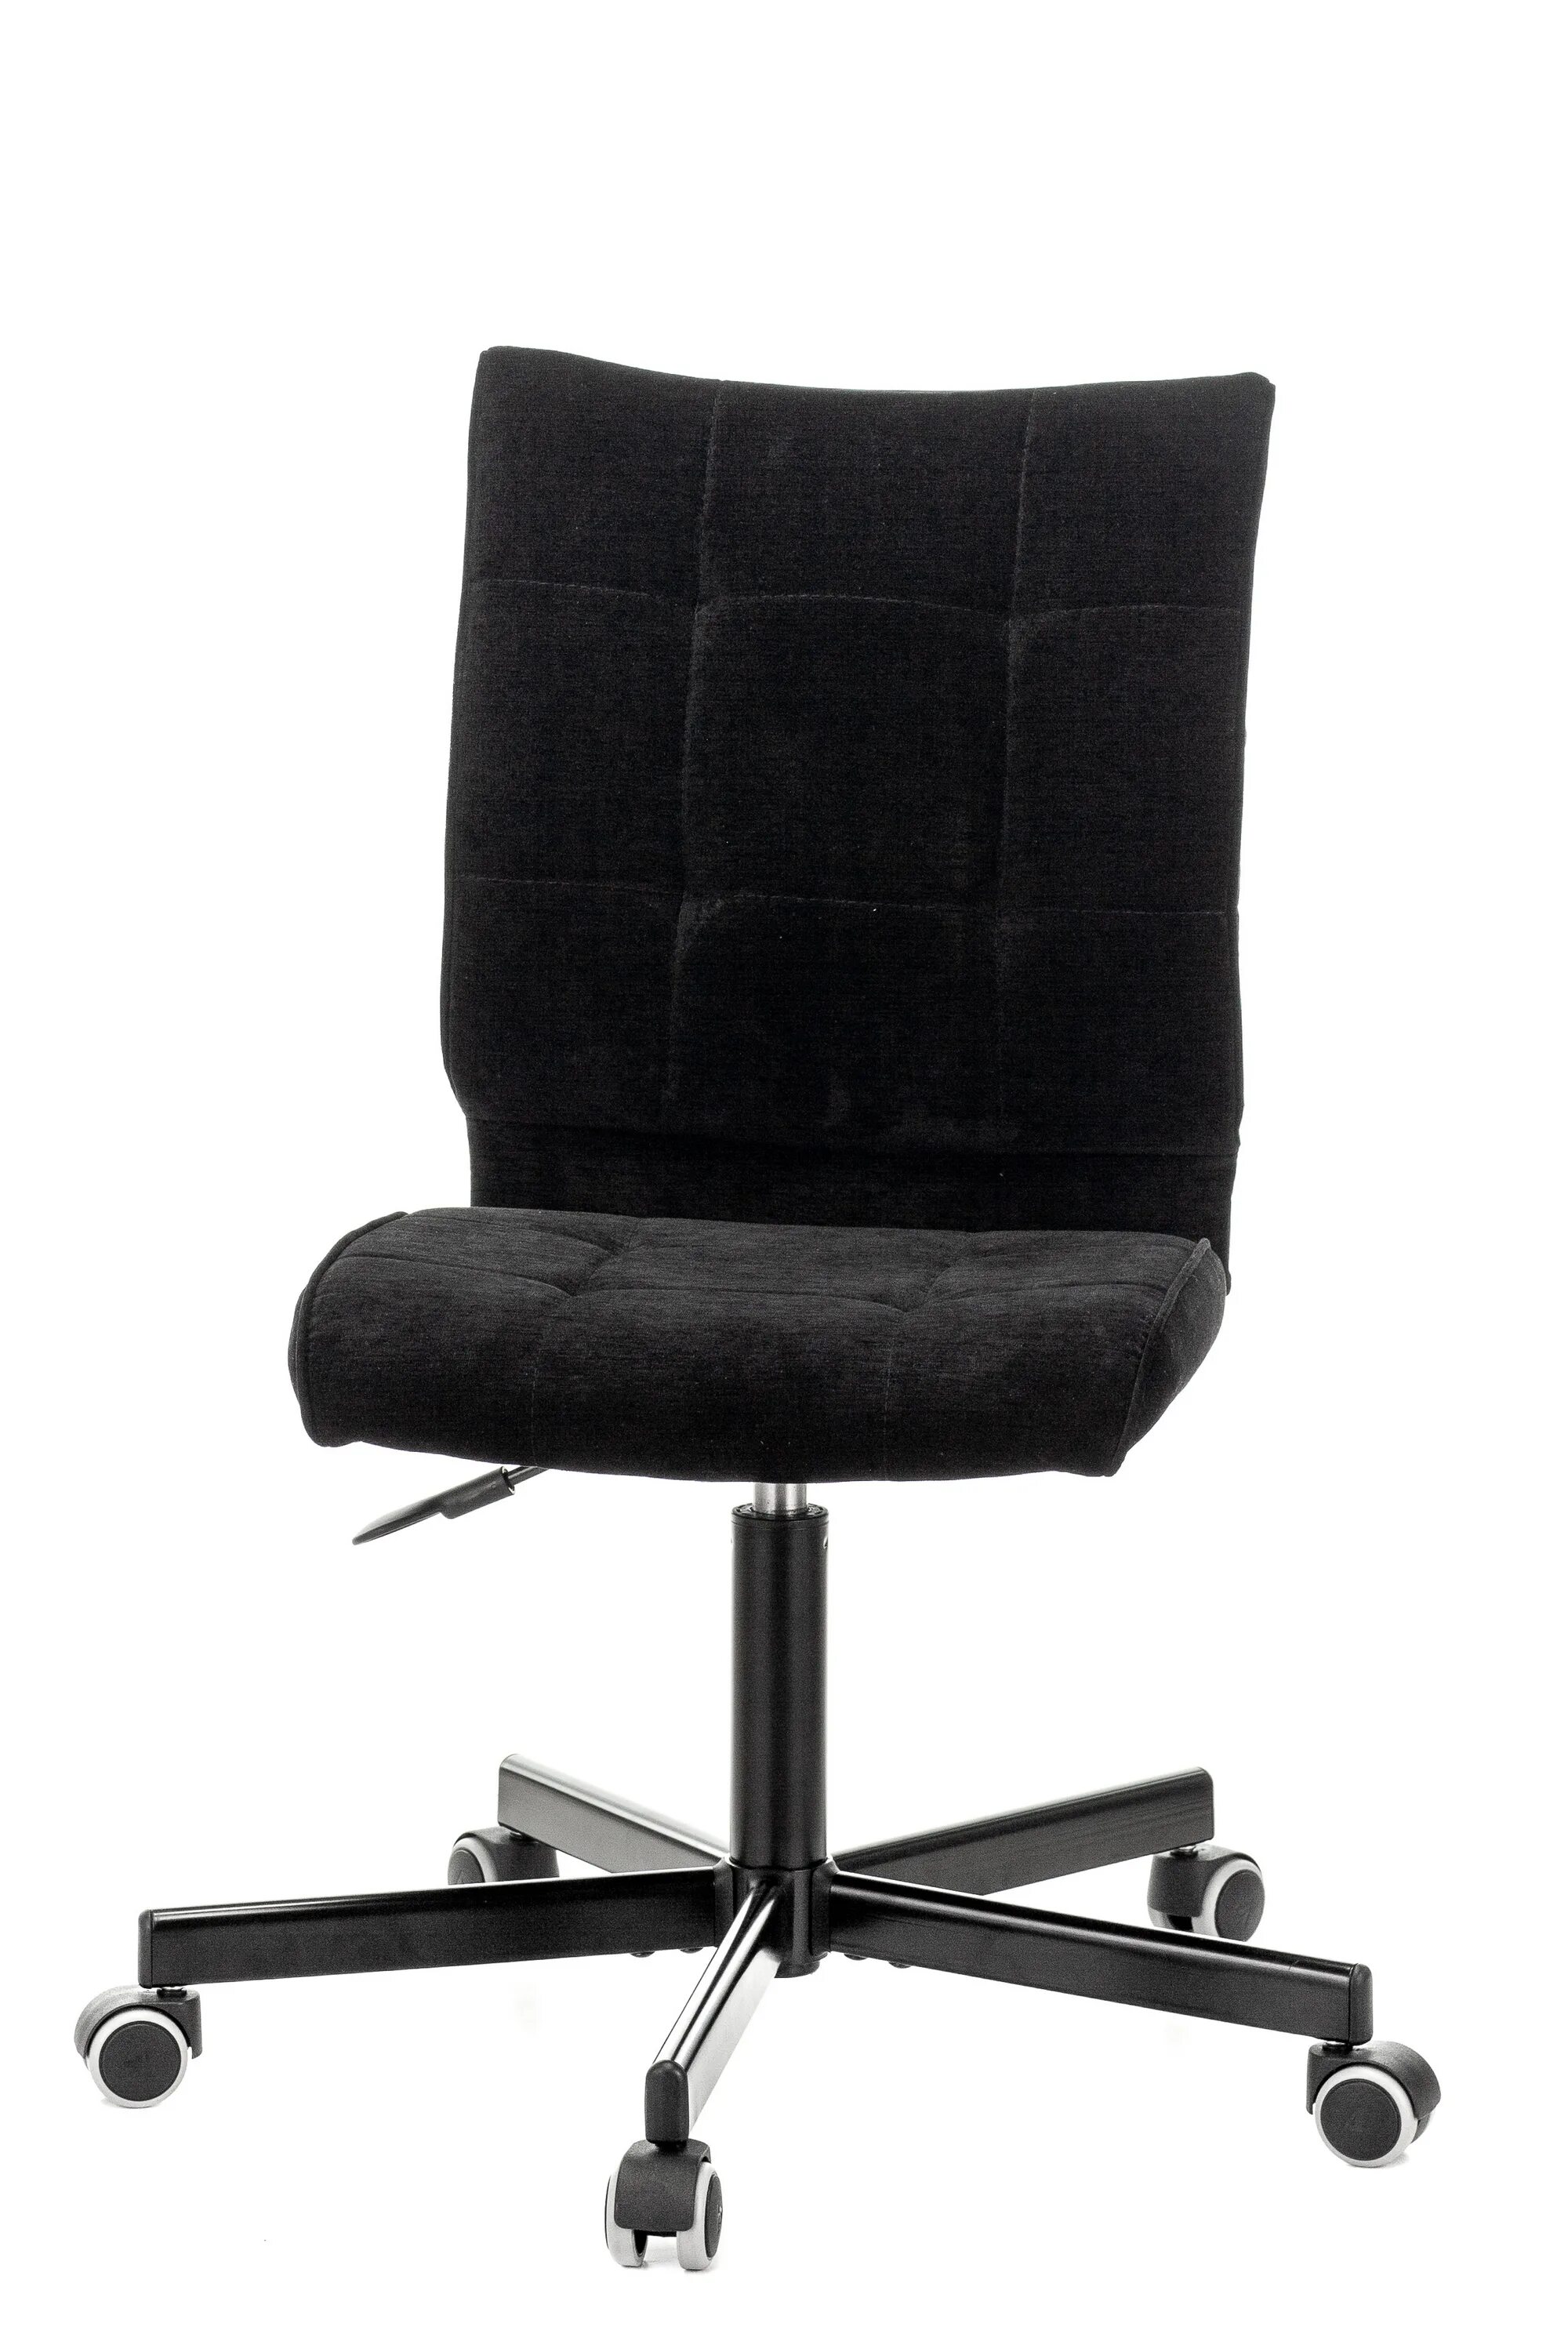 Кресло Бюрократ Ch-330m черный Light-20 крестовина металл черный. Кресло Бюрократ Ch-330m черный Leather Black эко.кожа крестов. Металл черный.